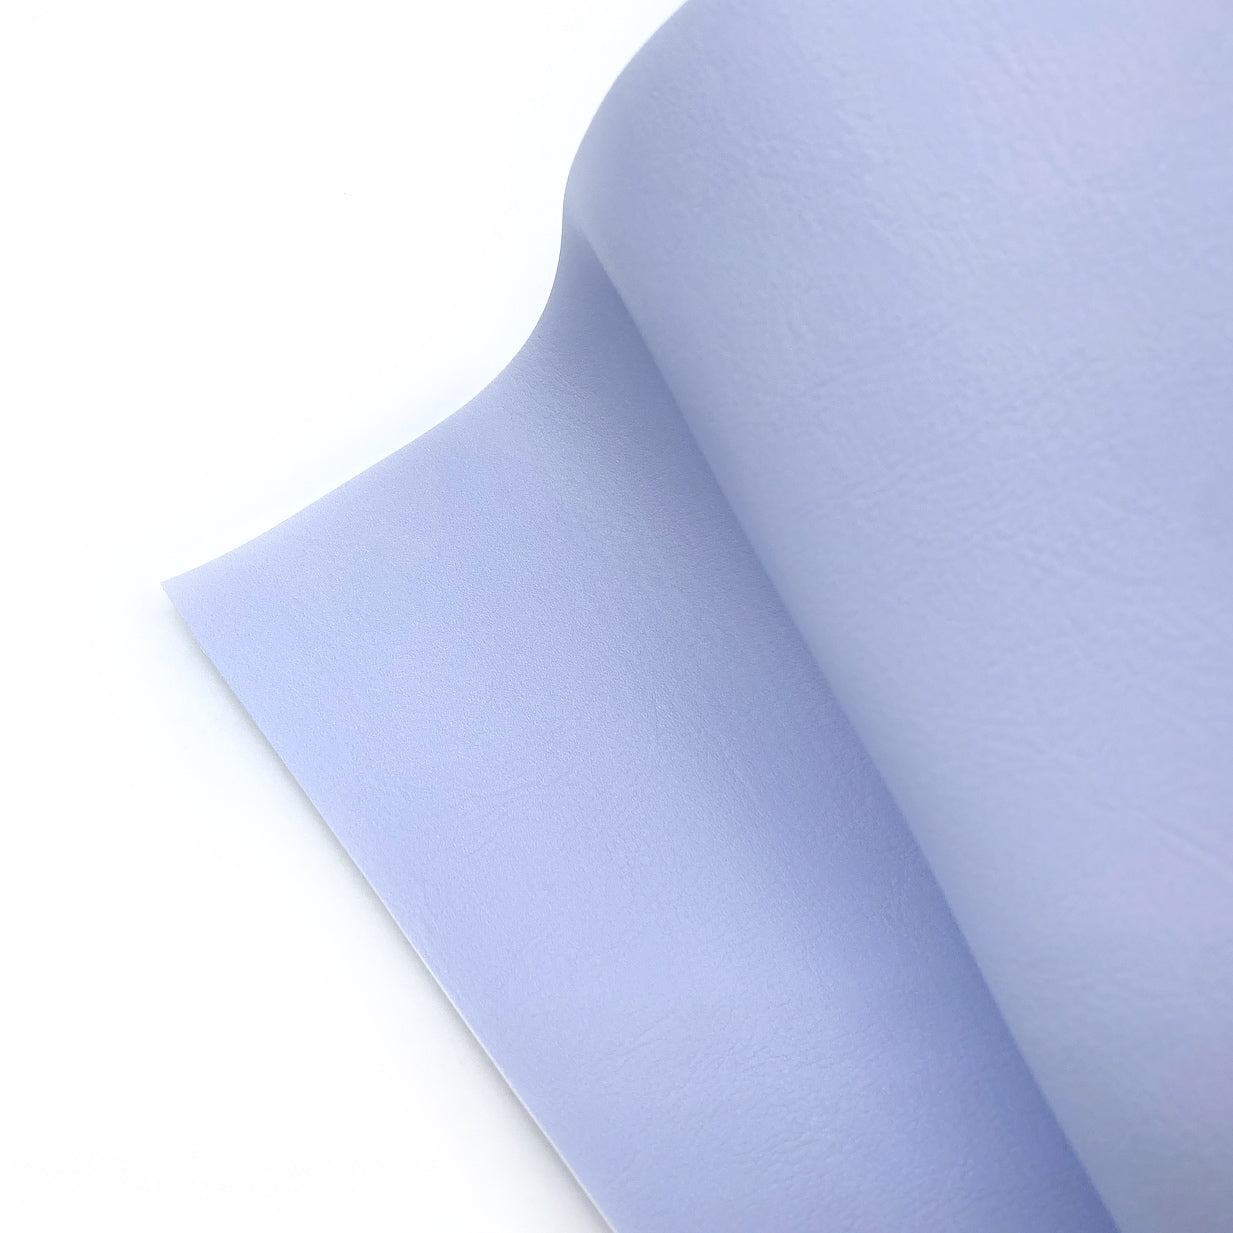 Lush Lilac Premium Faux Leather Fabric Sheets